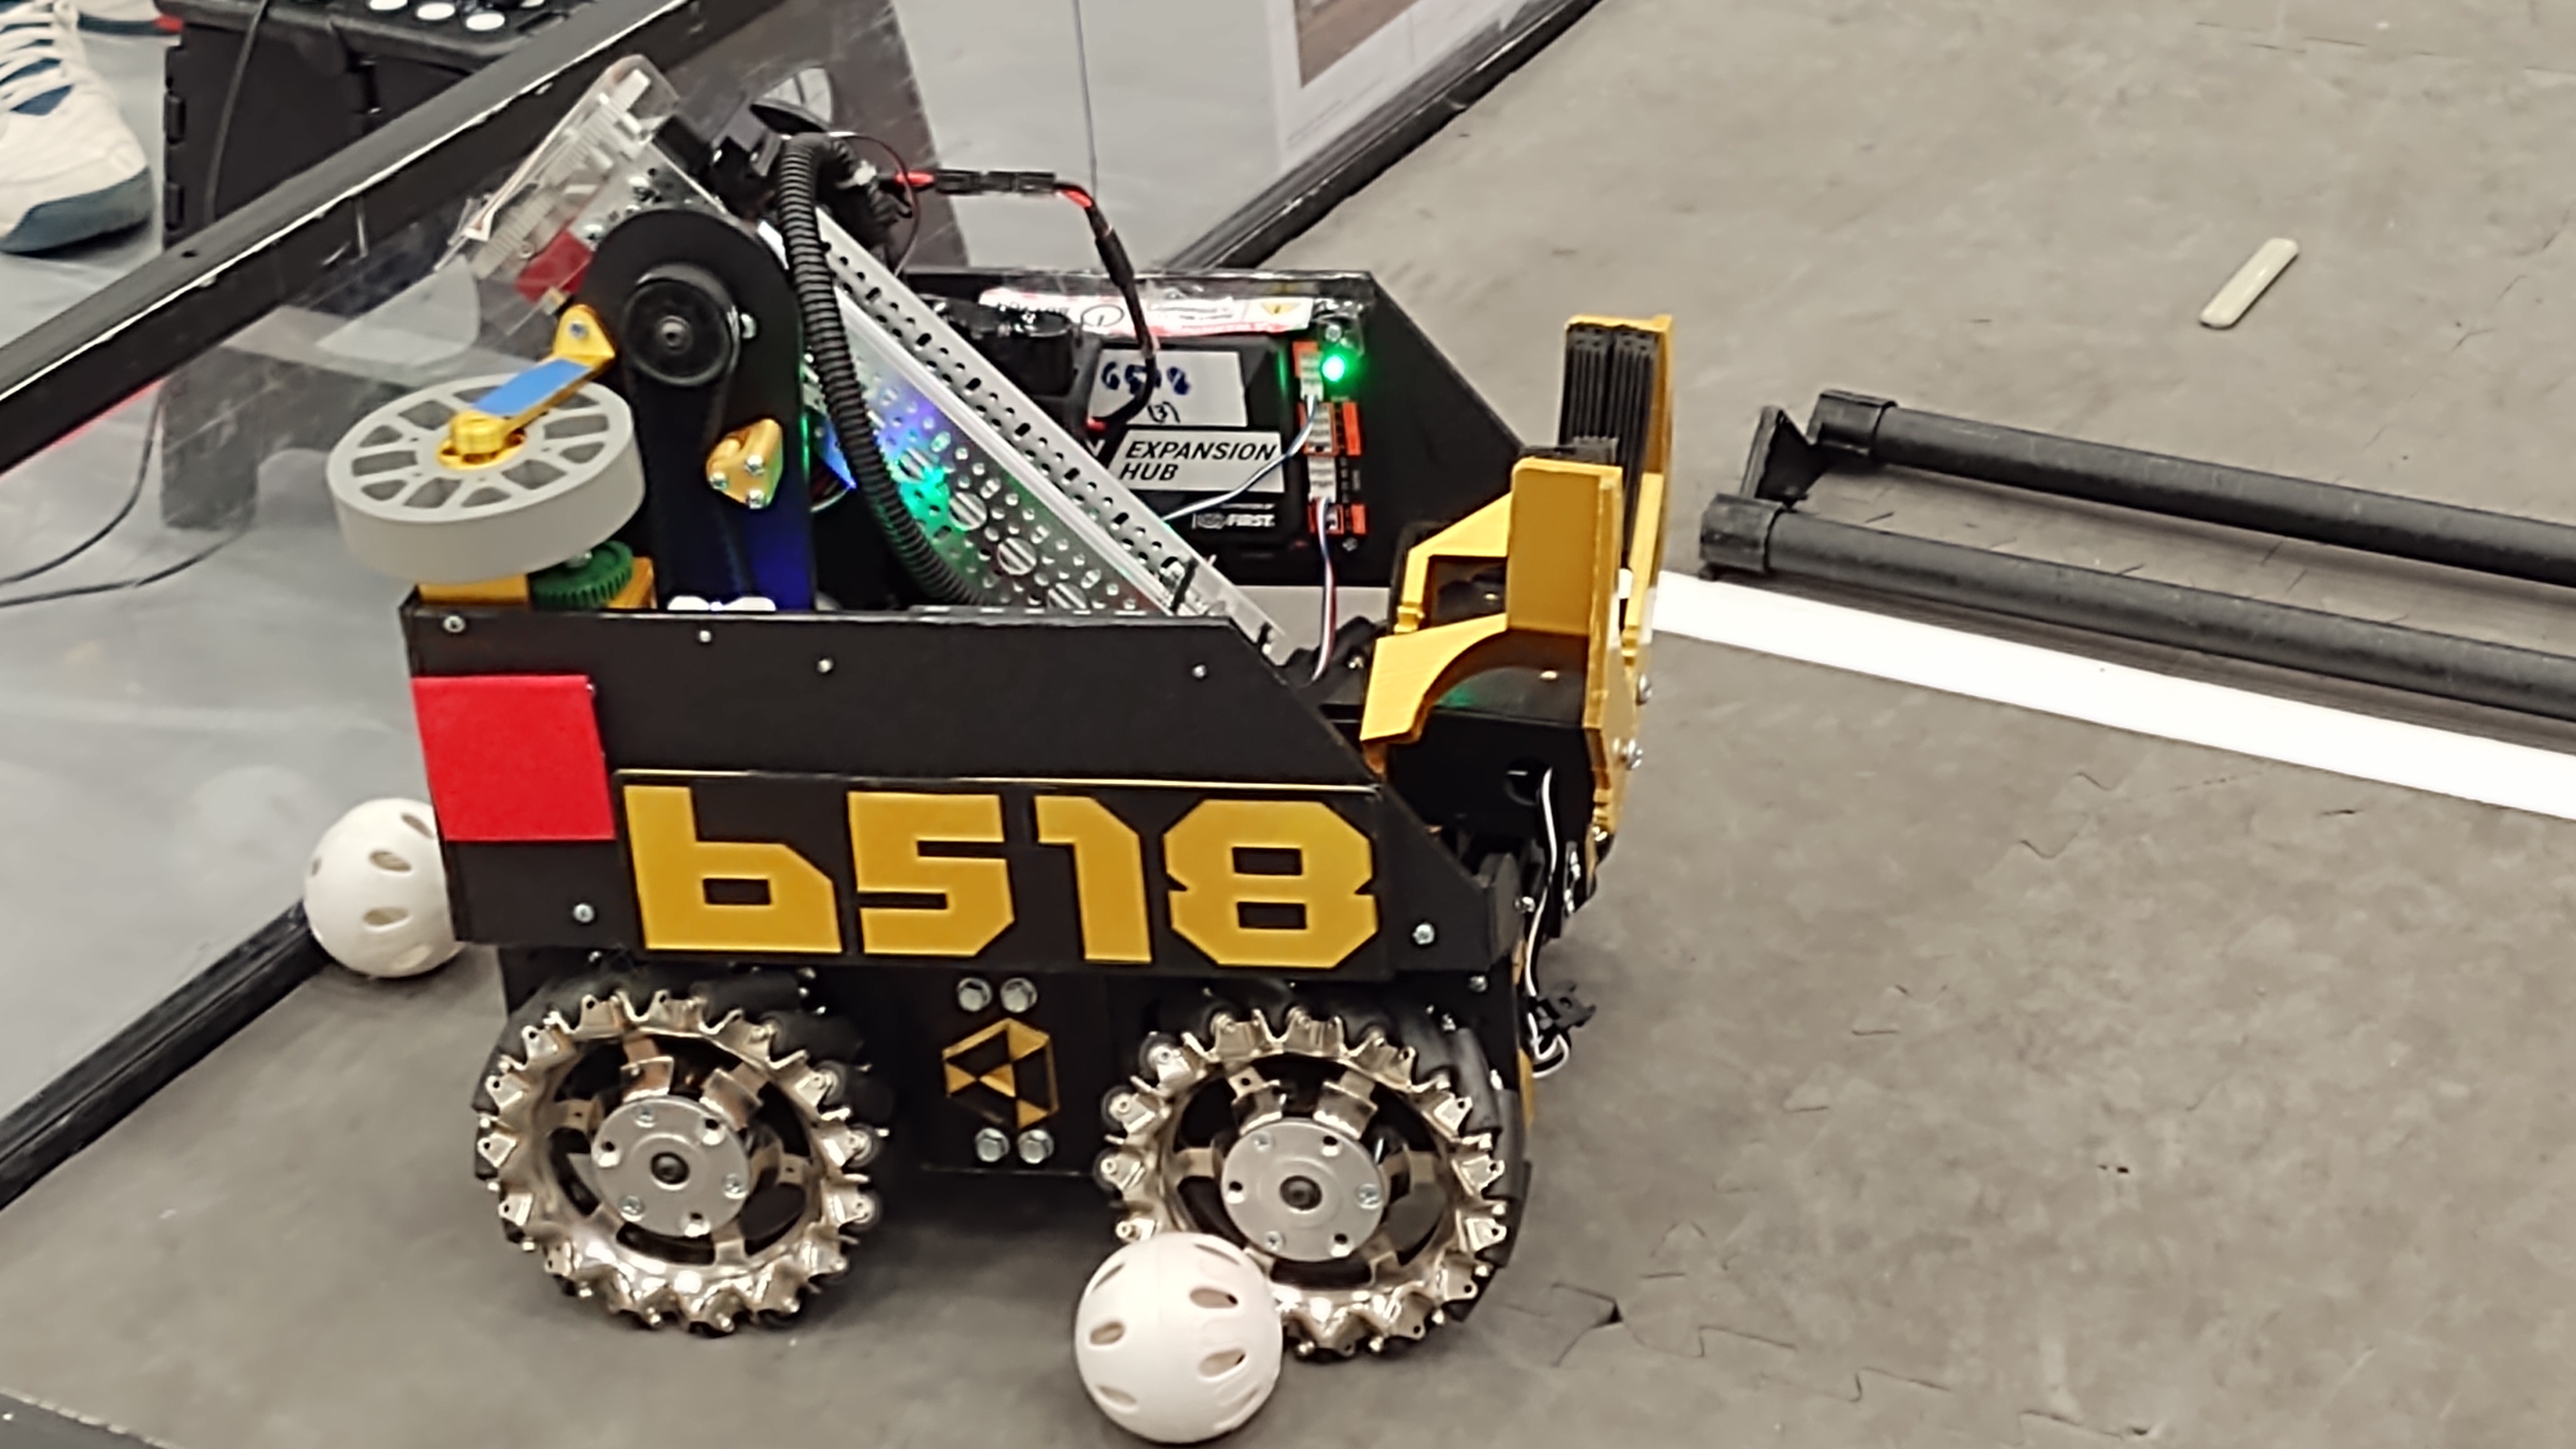 FTC 6518 Freight Frenzy Robot比赛机器人车